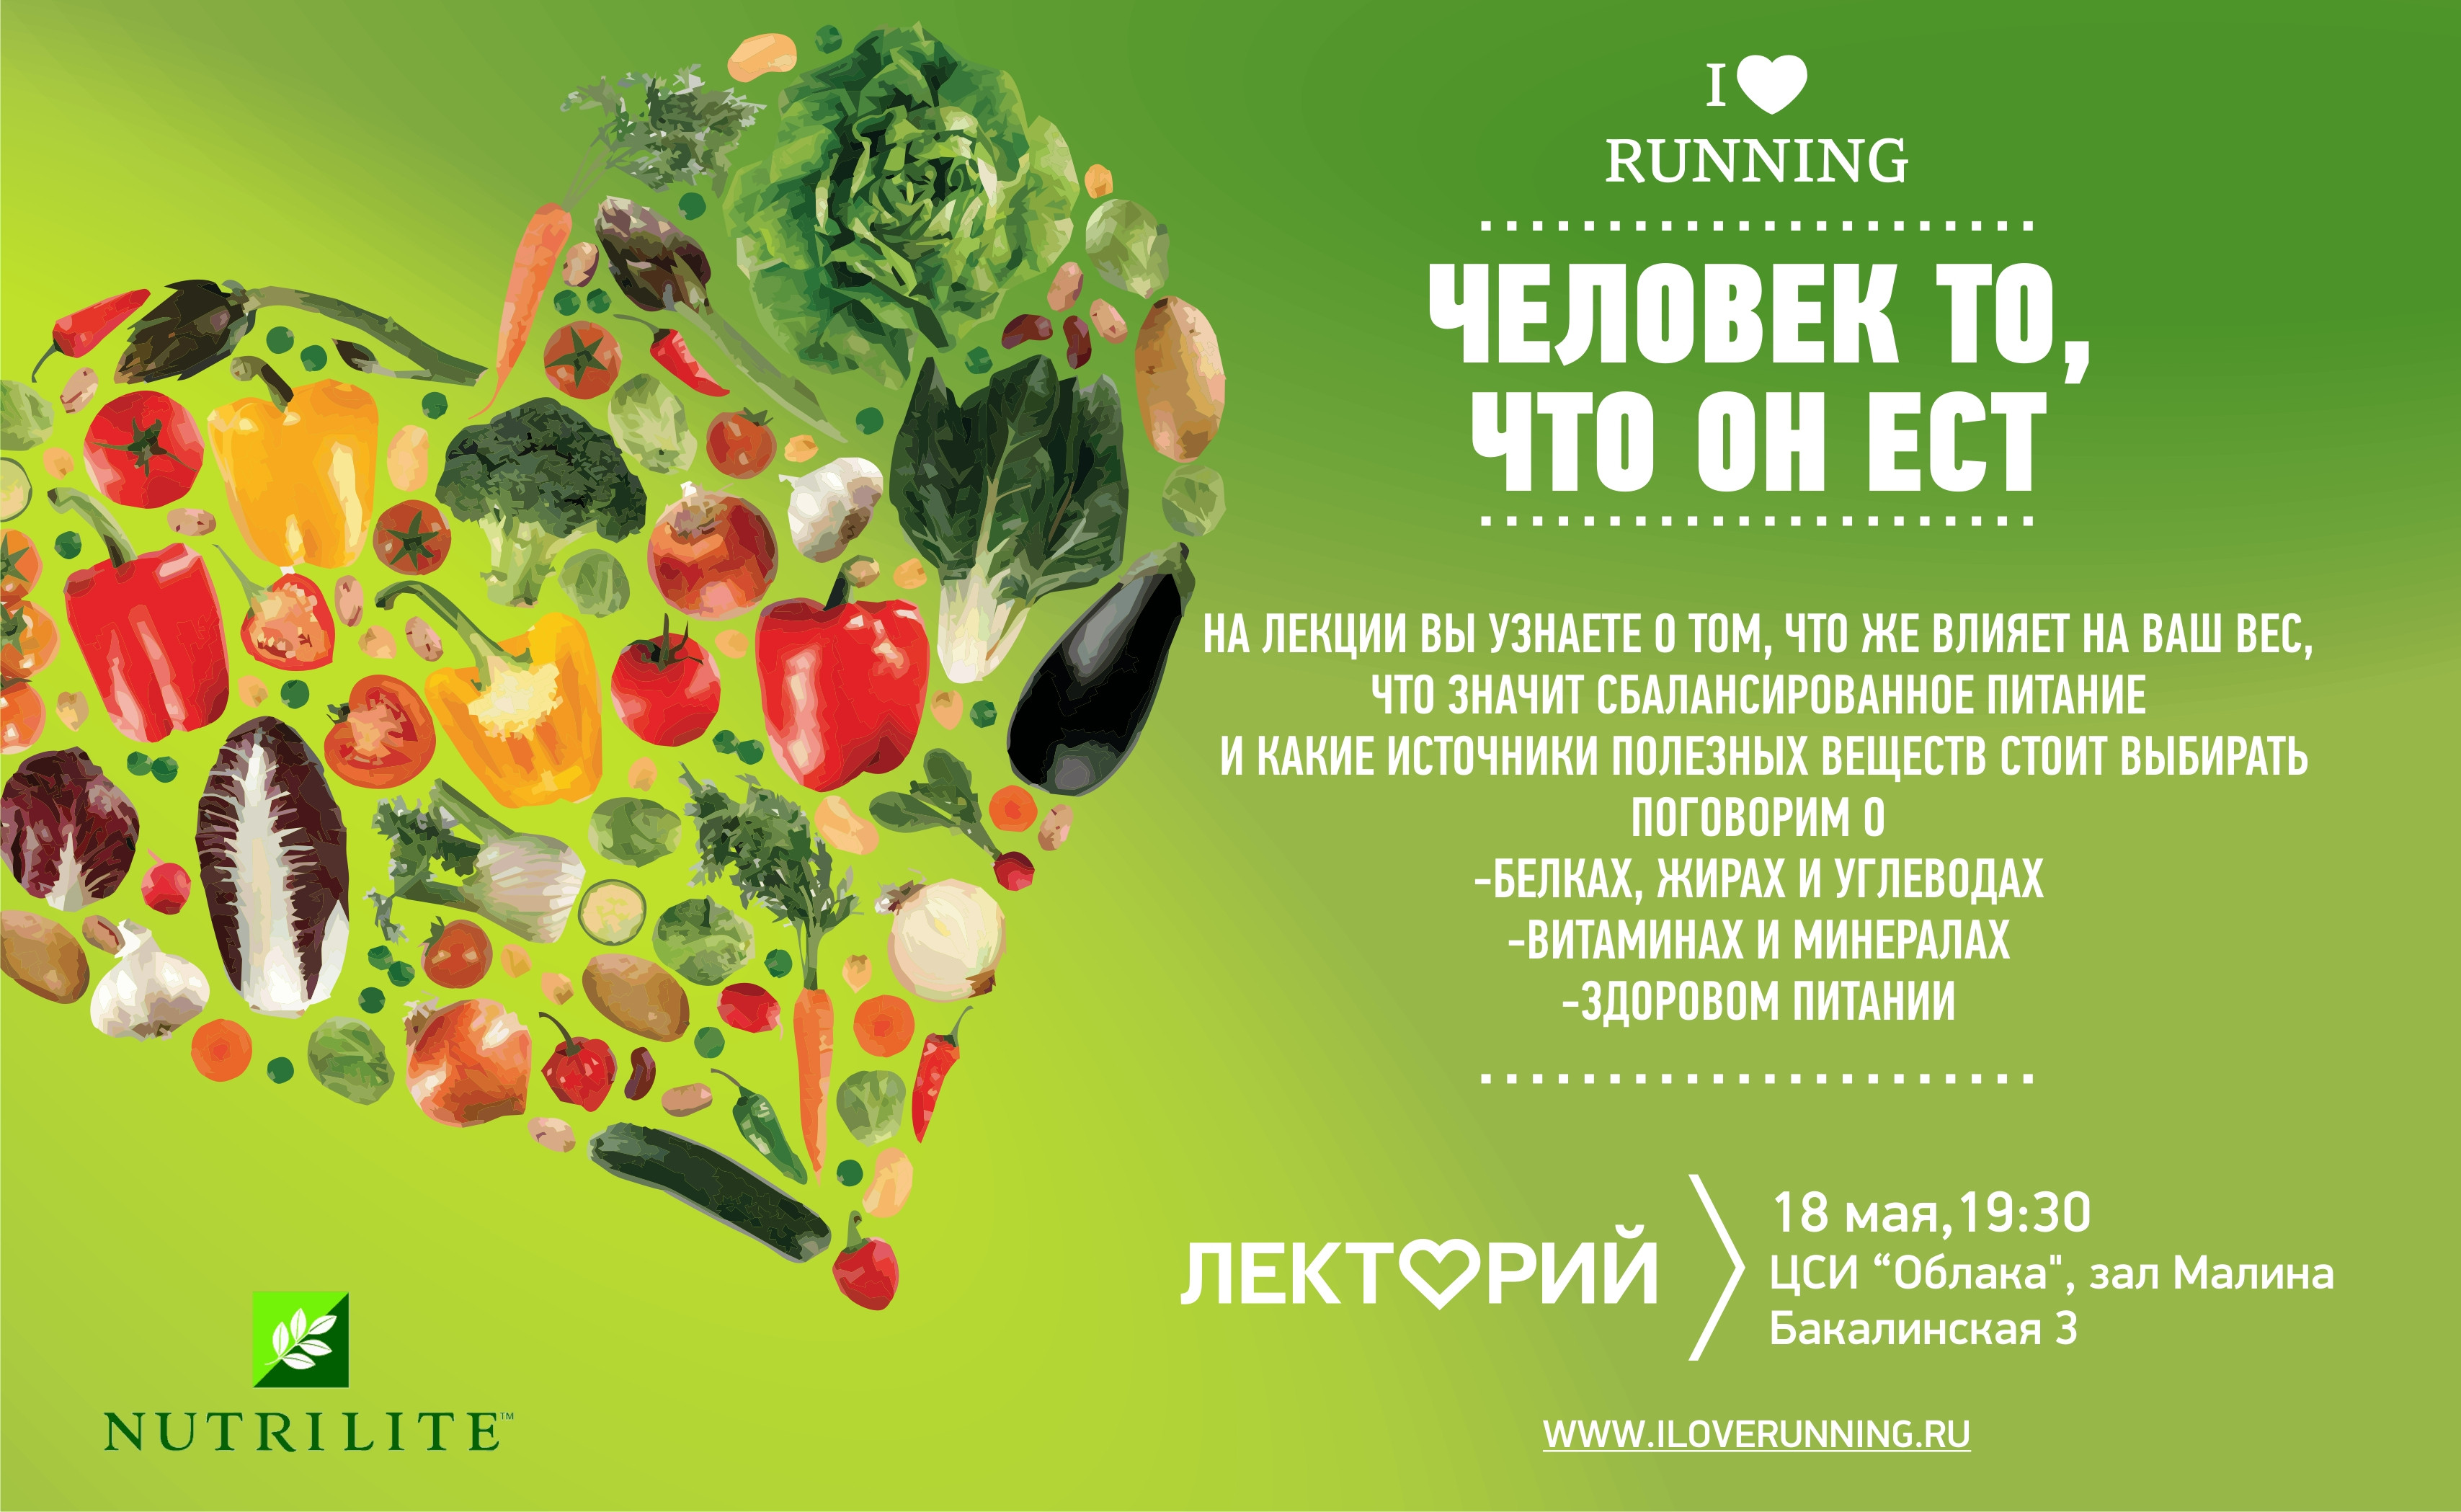 Слоган питания. Реклама здорового питания. Реклама магазина здорового питания. Реклама правильного питания. Реклама здорового питания слоган.